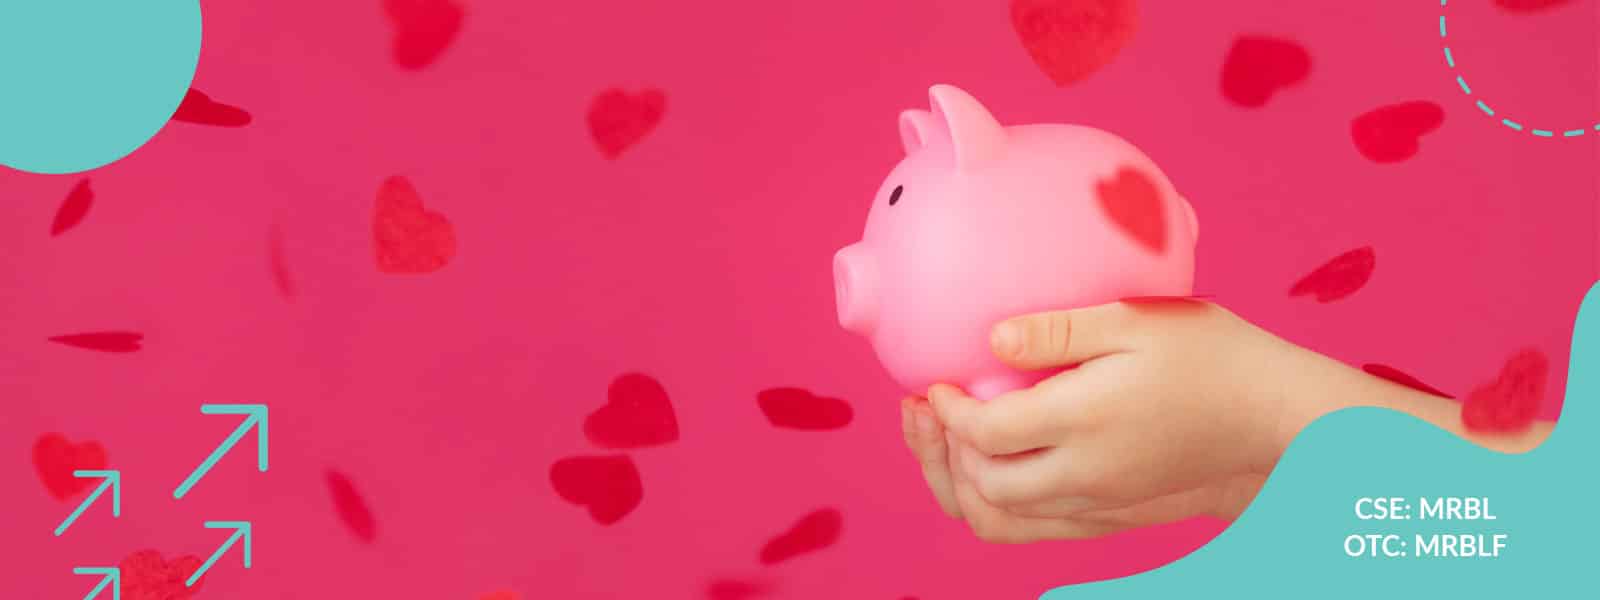 How Much Money To Spend On Valentine's Day